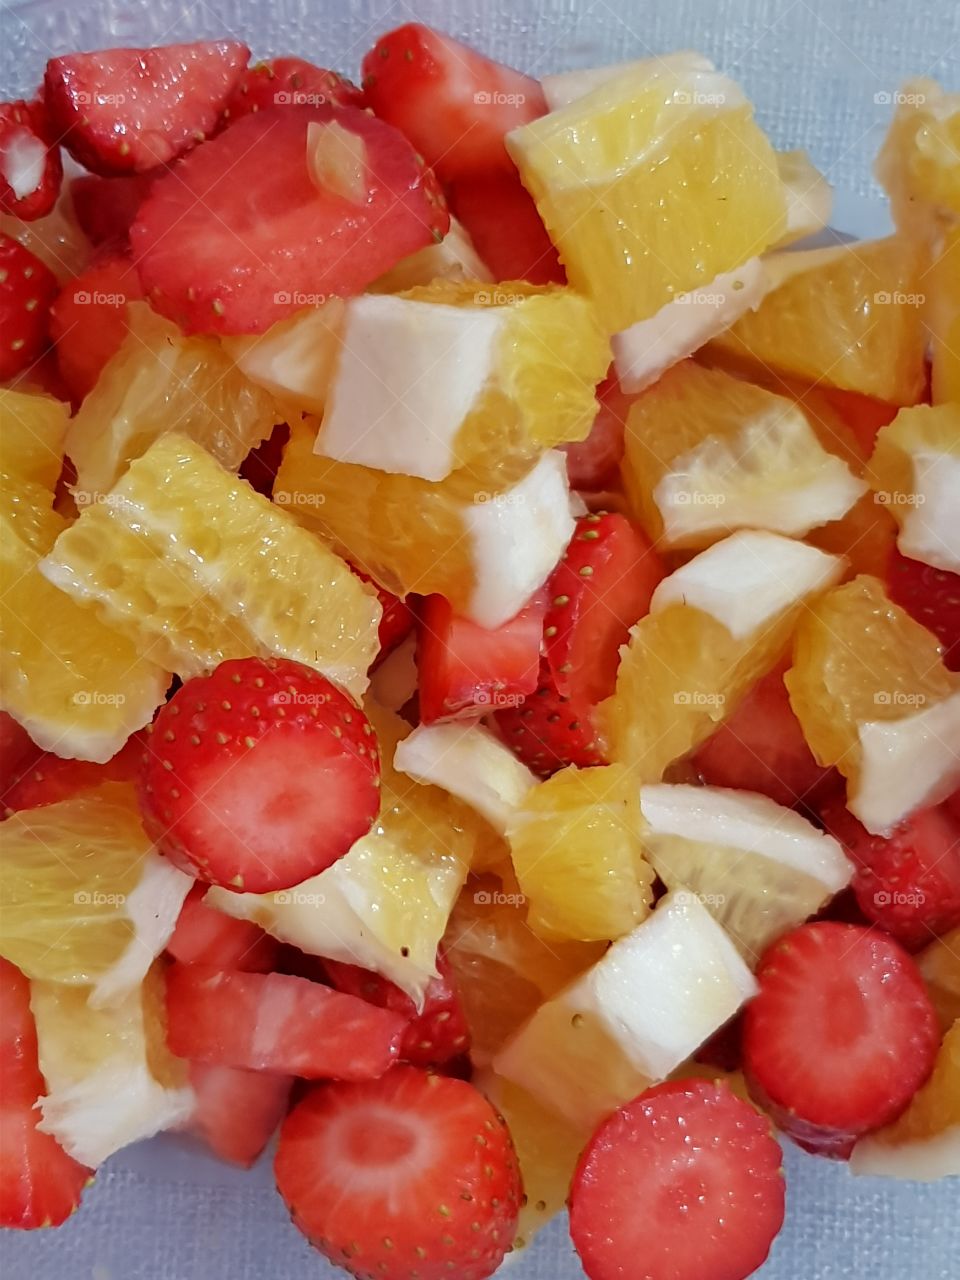 fruits salad